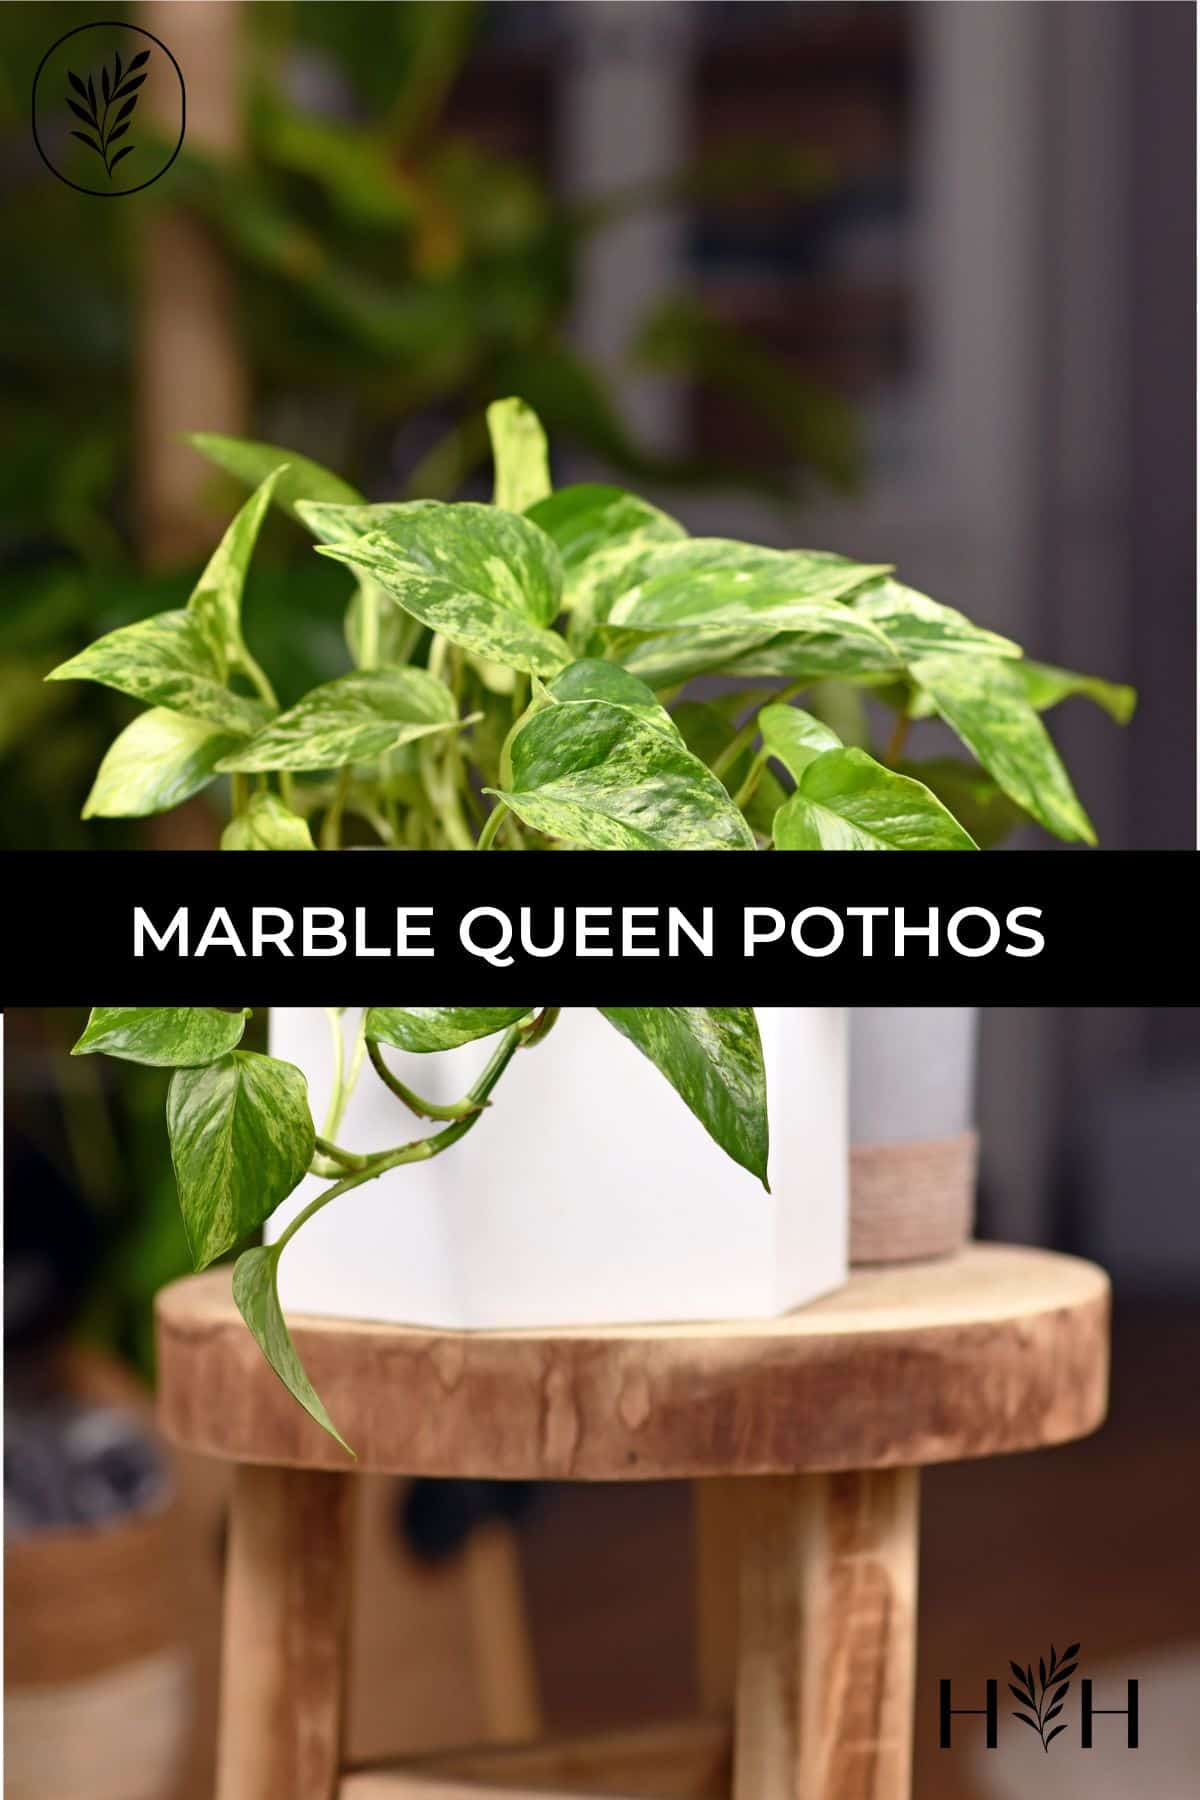 Marble queen pothos via @home4theharvest